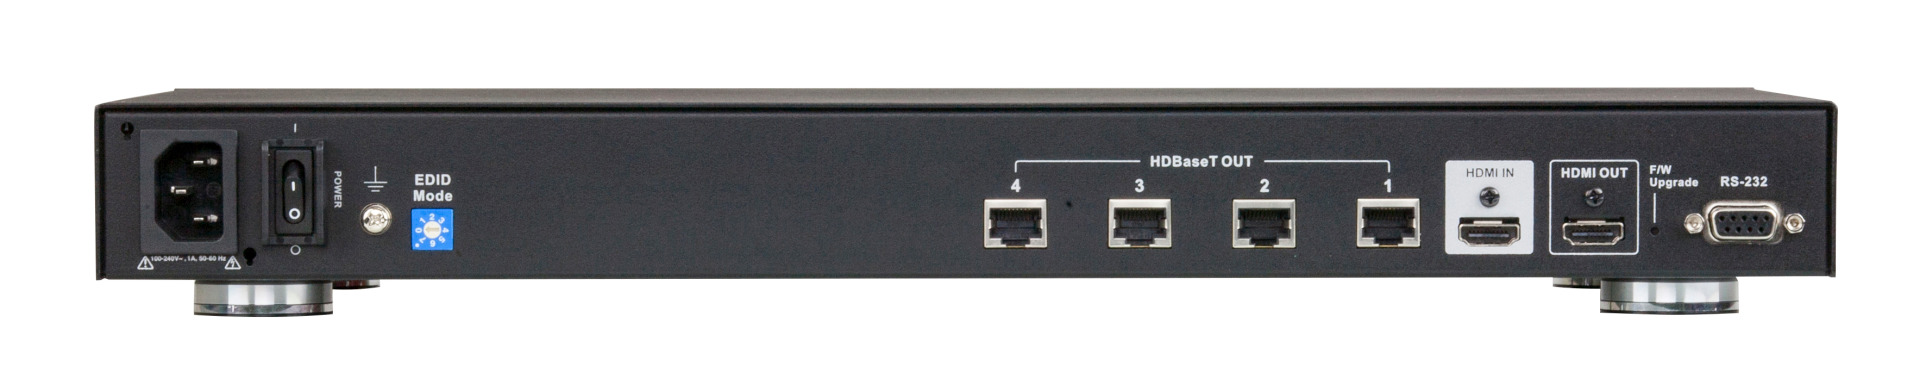 4-Port HDMI™ CAT5e/6 Splitter over Single Cat Cable, 4K / RS232 / HDBaseT